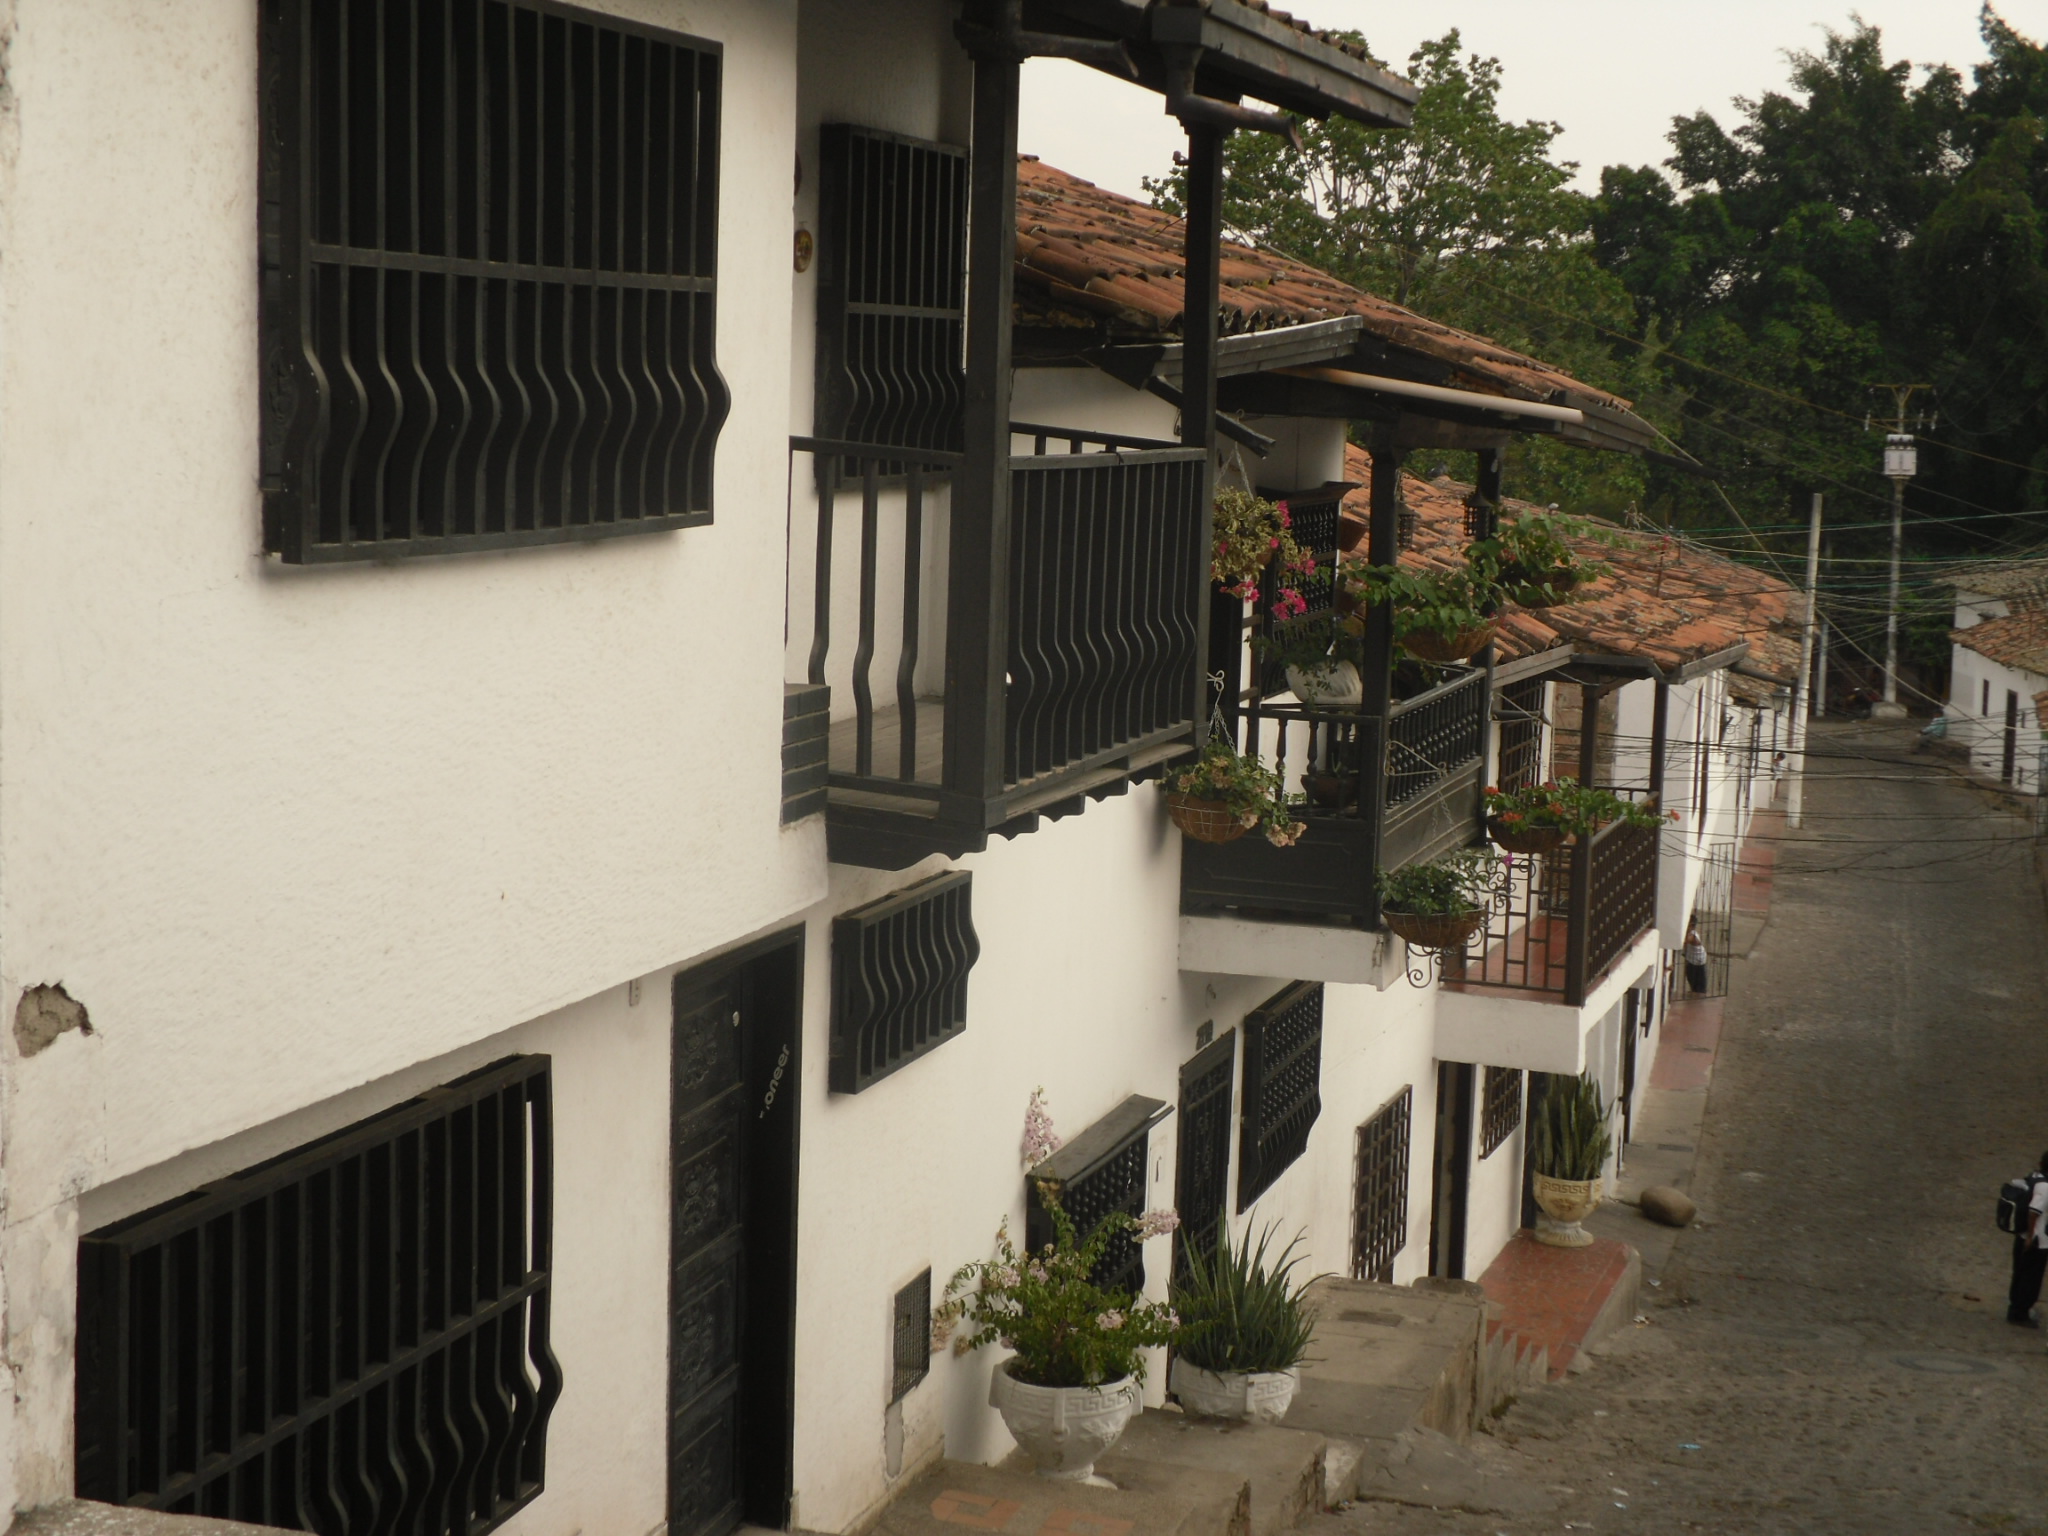 Street scenes of Barichara Colombia